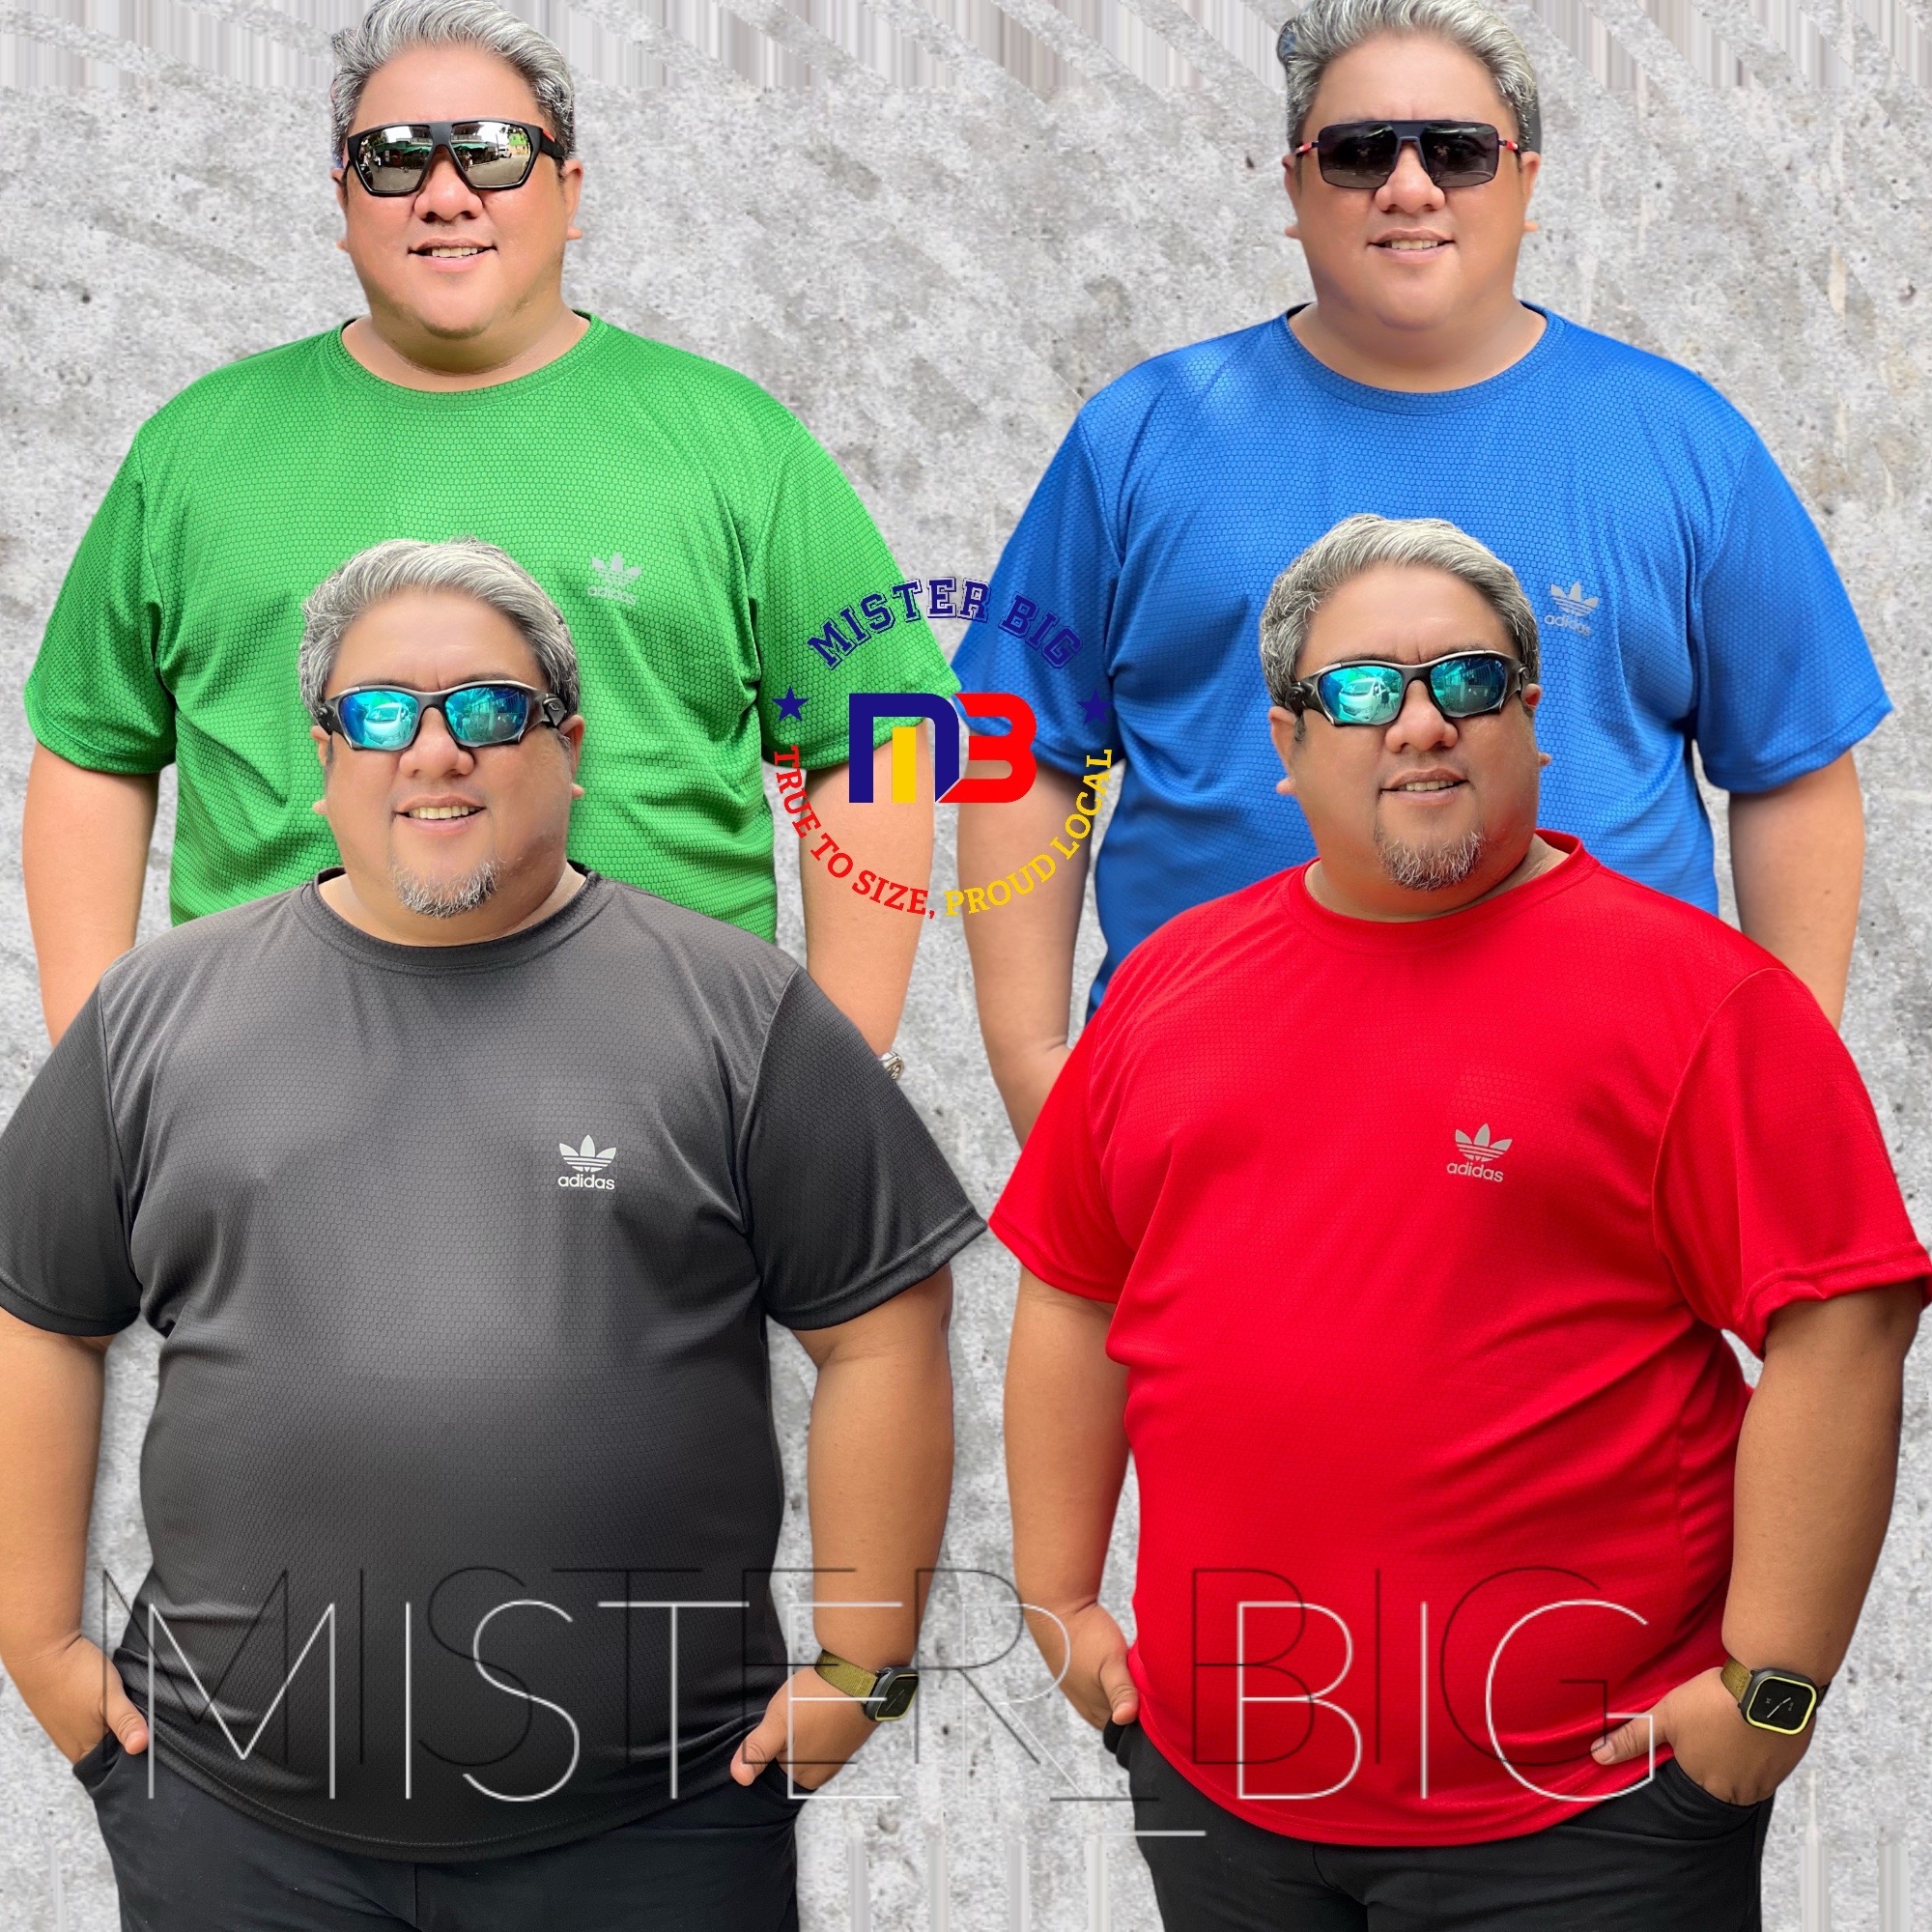 Dri-Fit Shirt for Women High Quality Tops Basics GYM Plus Size for Men COD  Running Unisex Plain